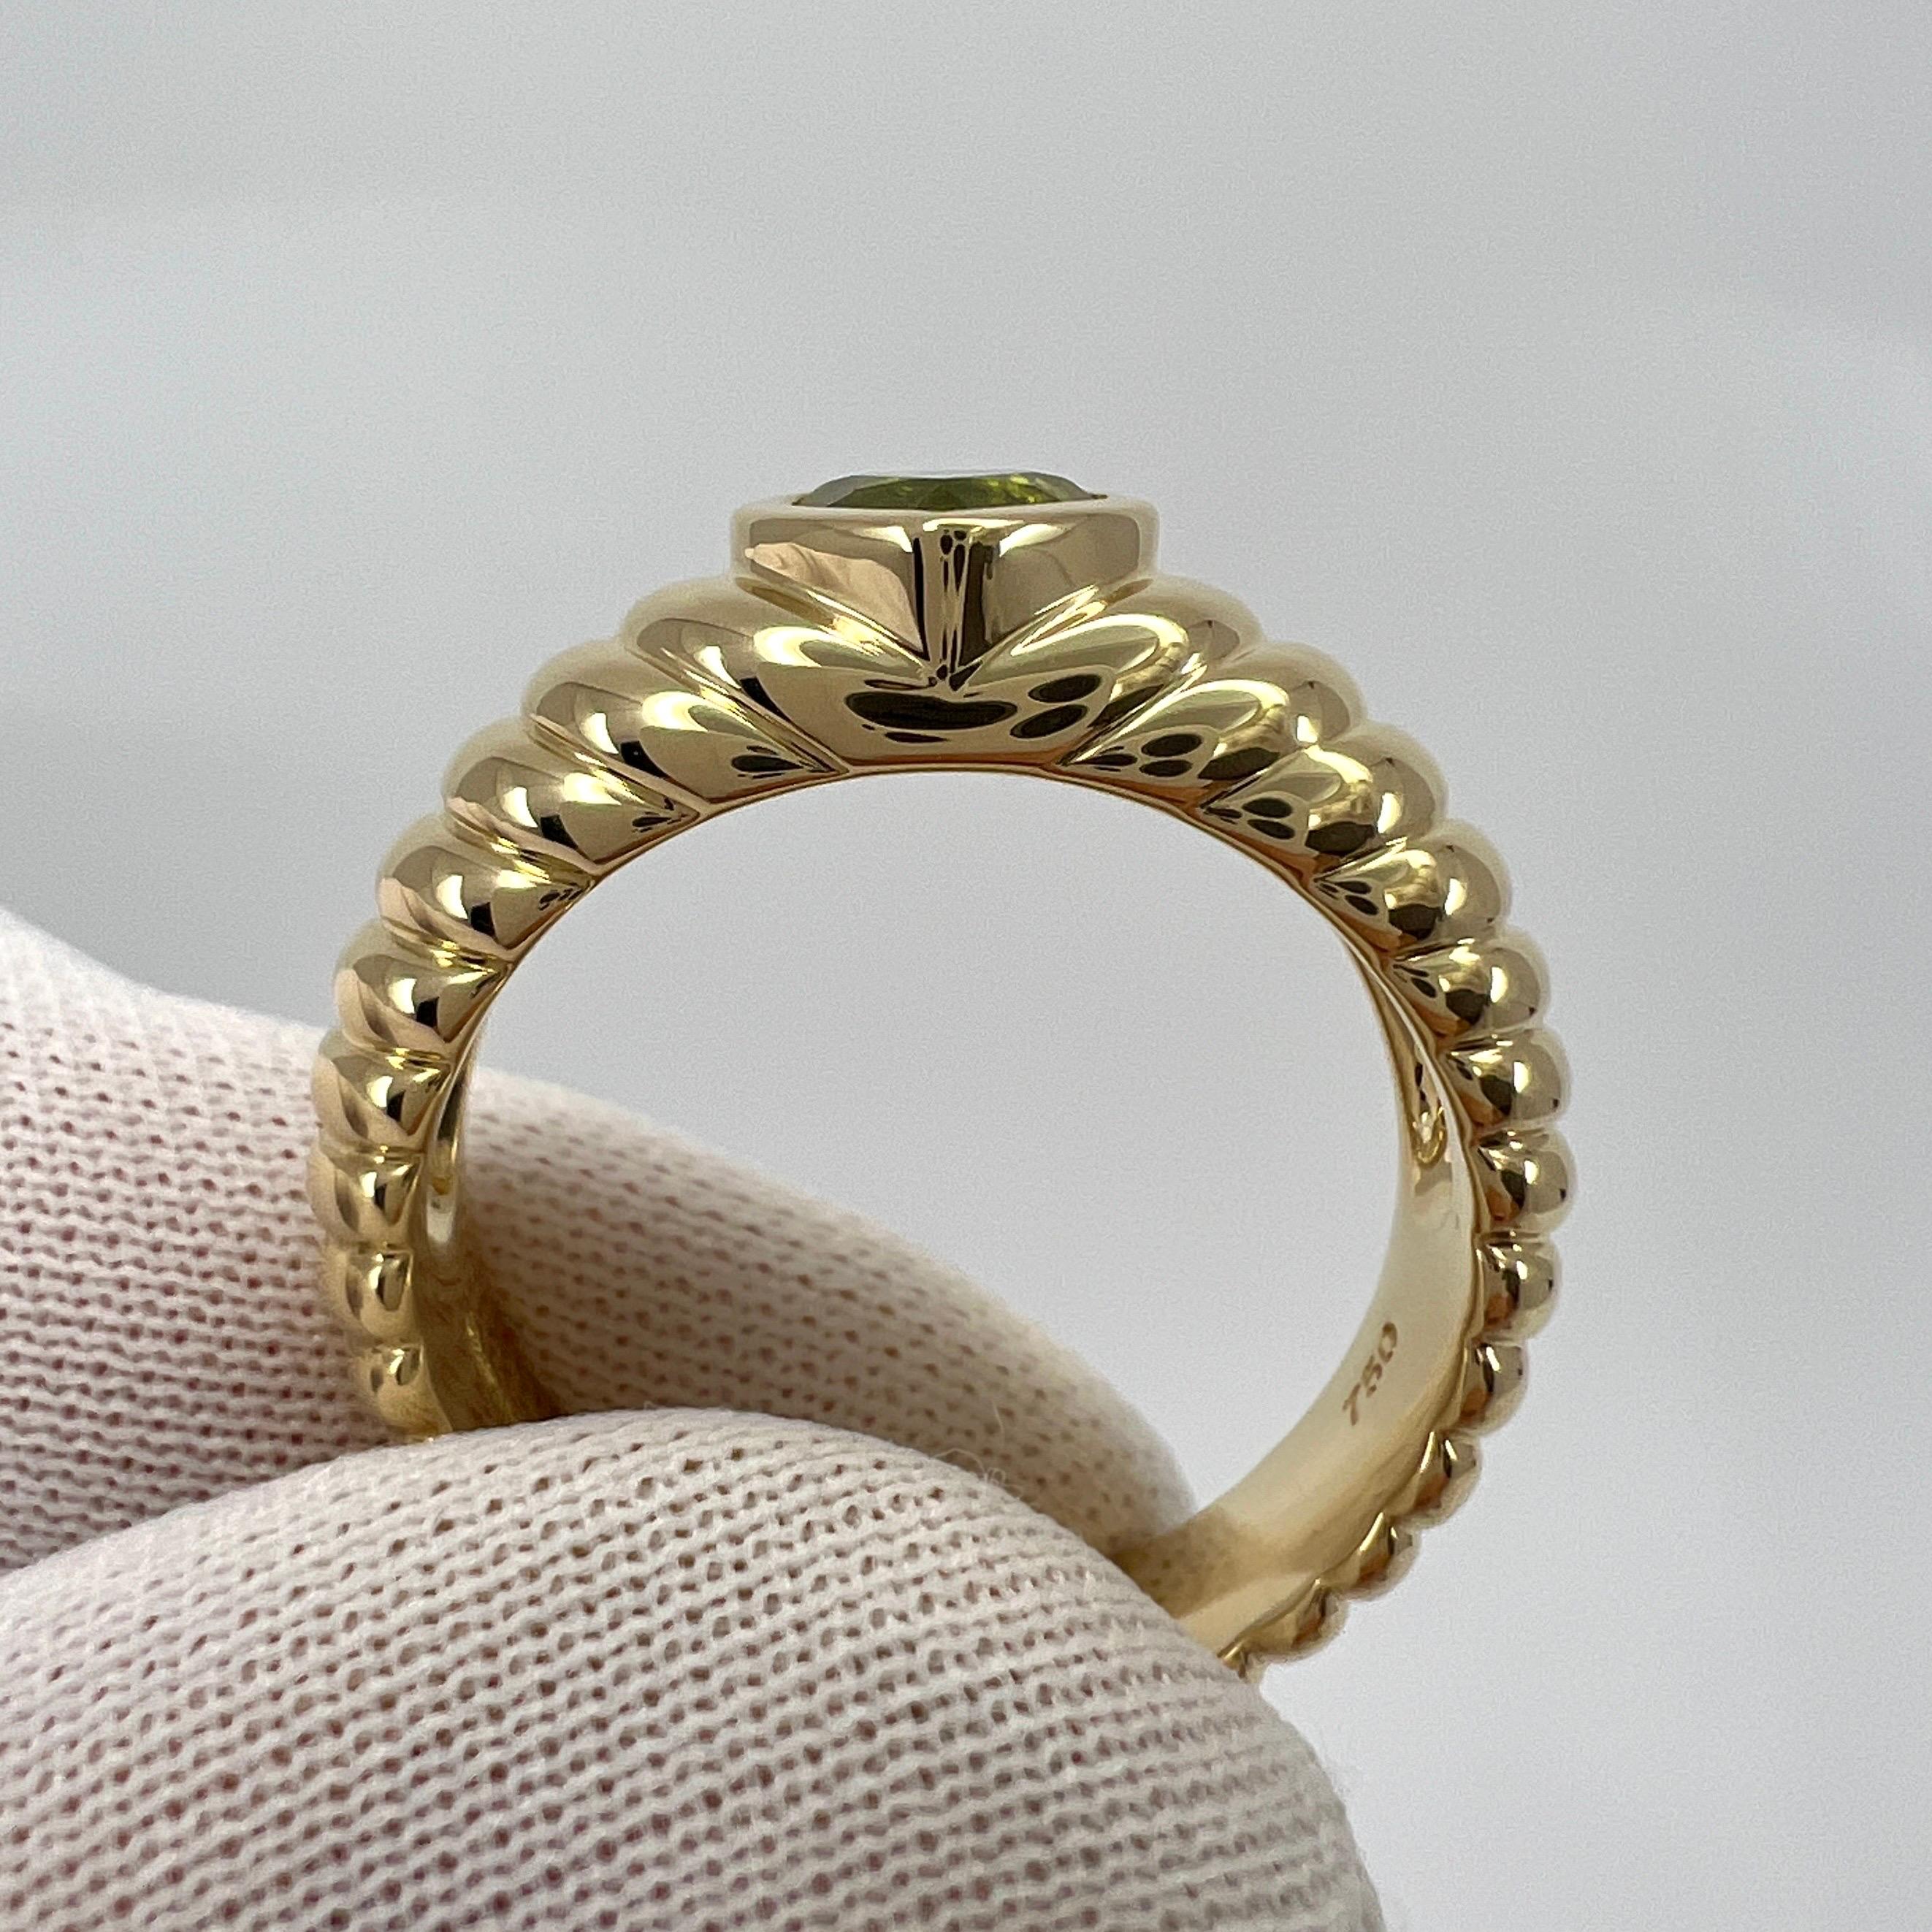 Fine Tiffany & Co. Vivid Green Peridot Heart Cut 18k Yellow Gold Band Ring For Sale 4